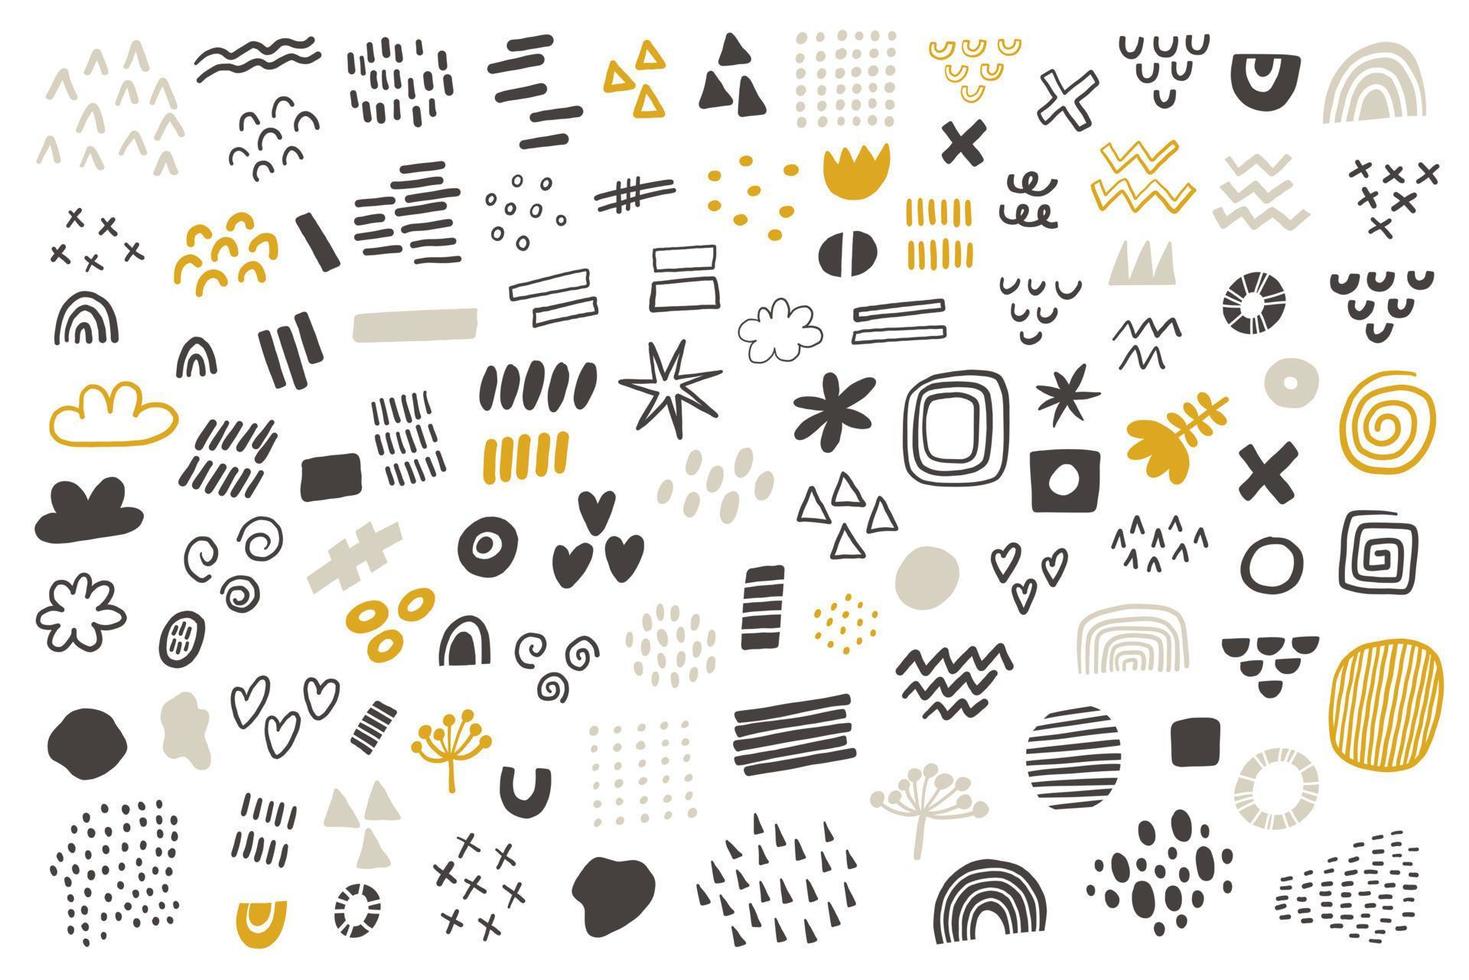 elementos de diseño de garabatos dibujados a mano escandinavos, negros sobre fondo blanco. silbidos, swoops, énfasis, triángulos, líneas, manchas, espirales, ondas, círculos, cruces, pinceladas. colección de vectores